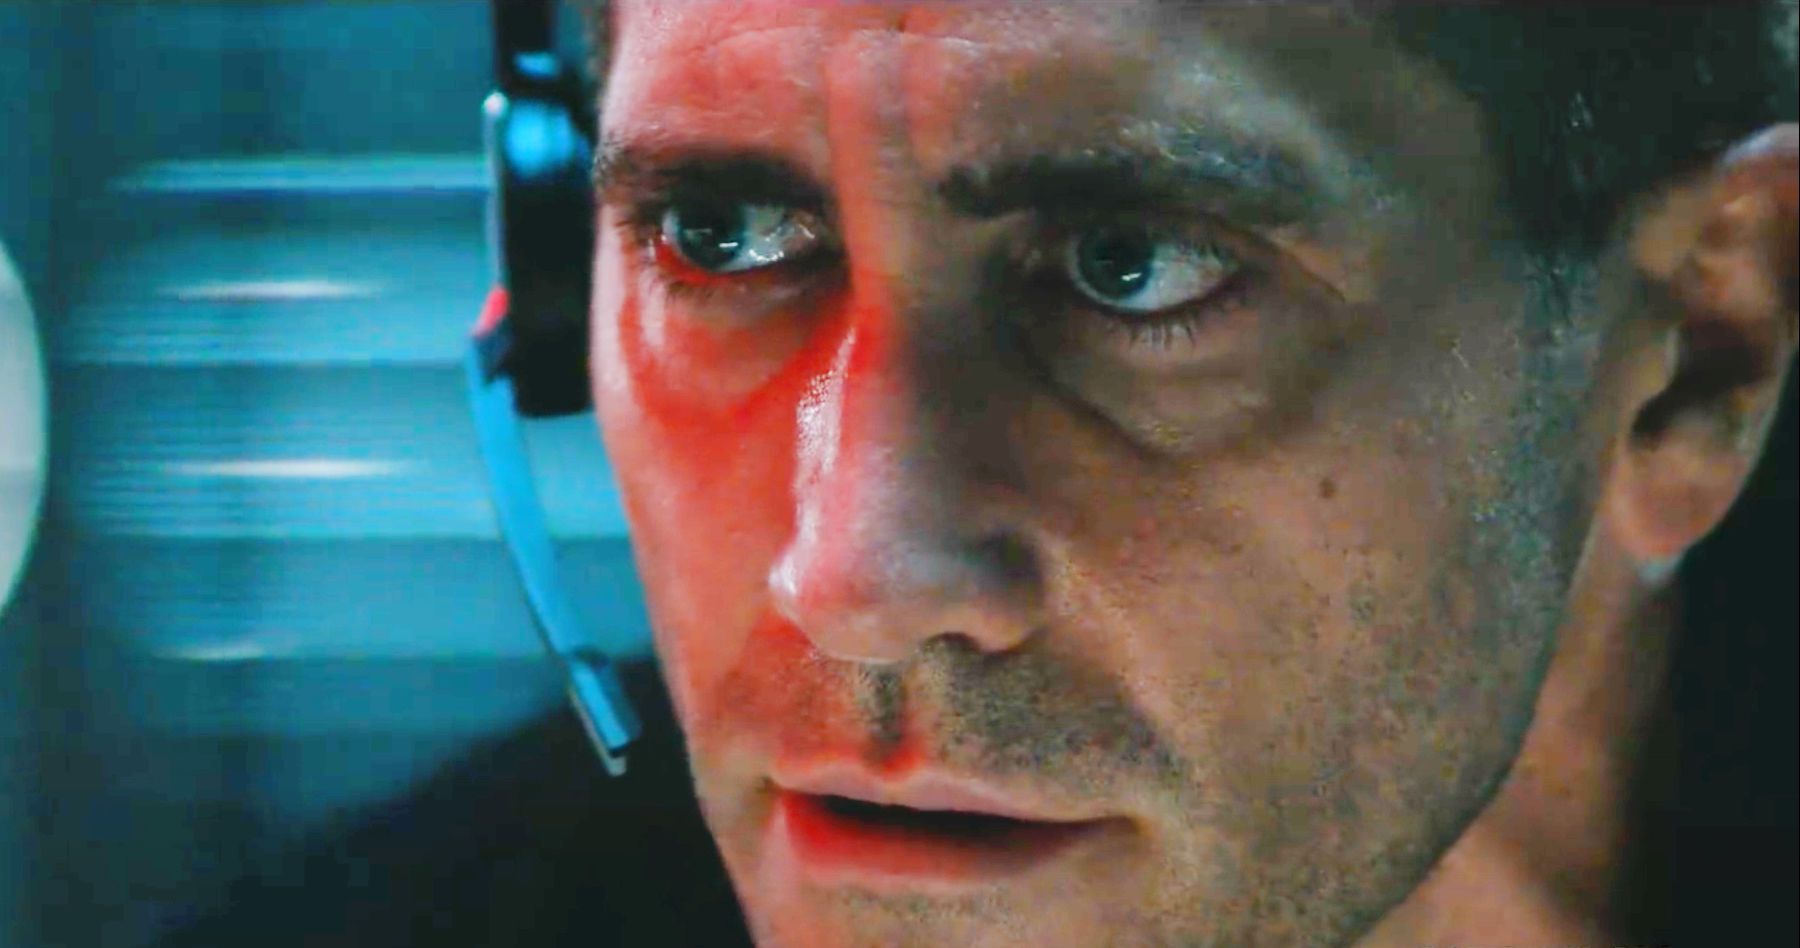 The Guilty Trailer: Jake Gyllenhaal Answers an Intense 911 Call in New Netflix Thriller